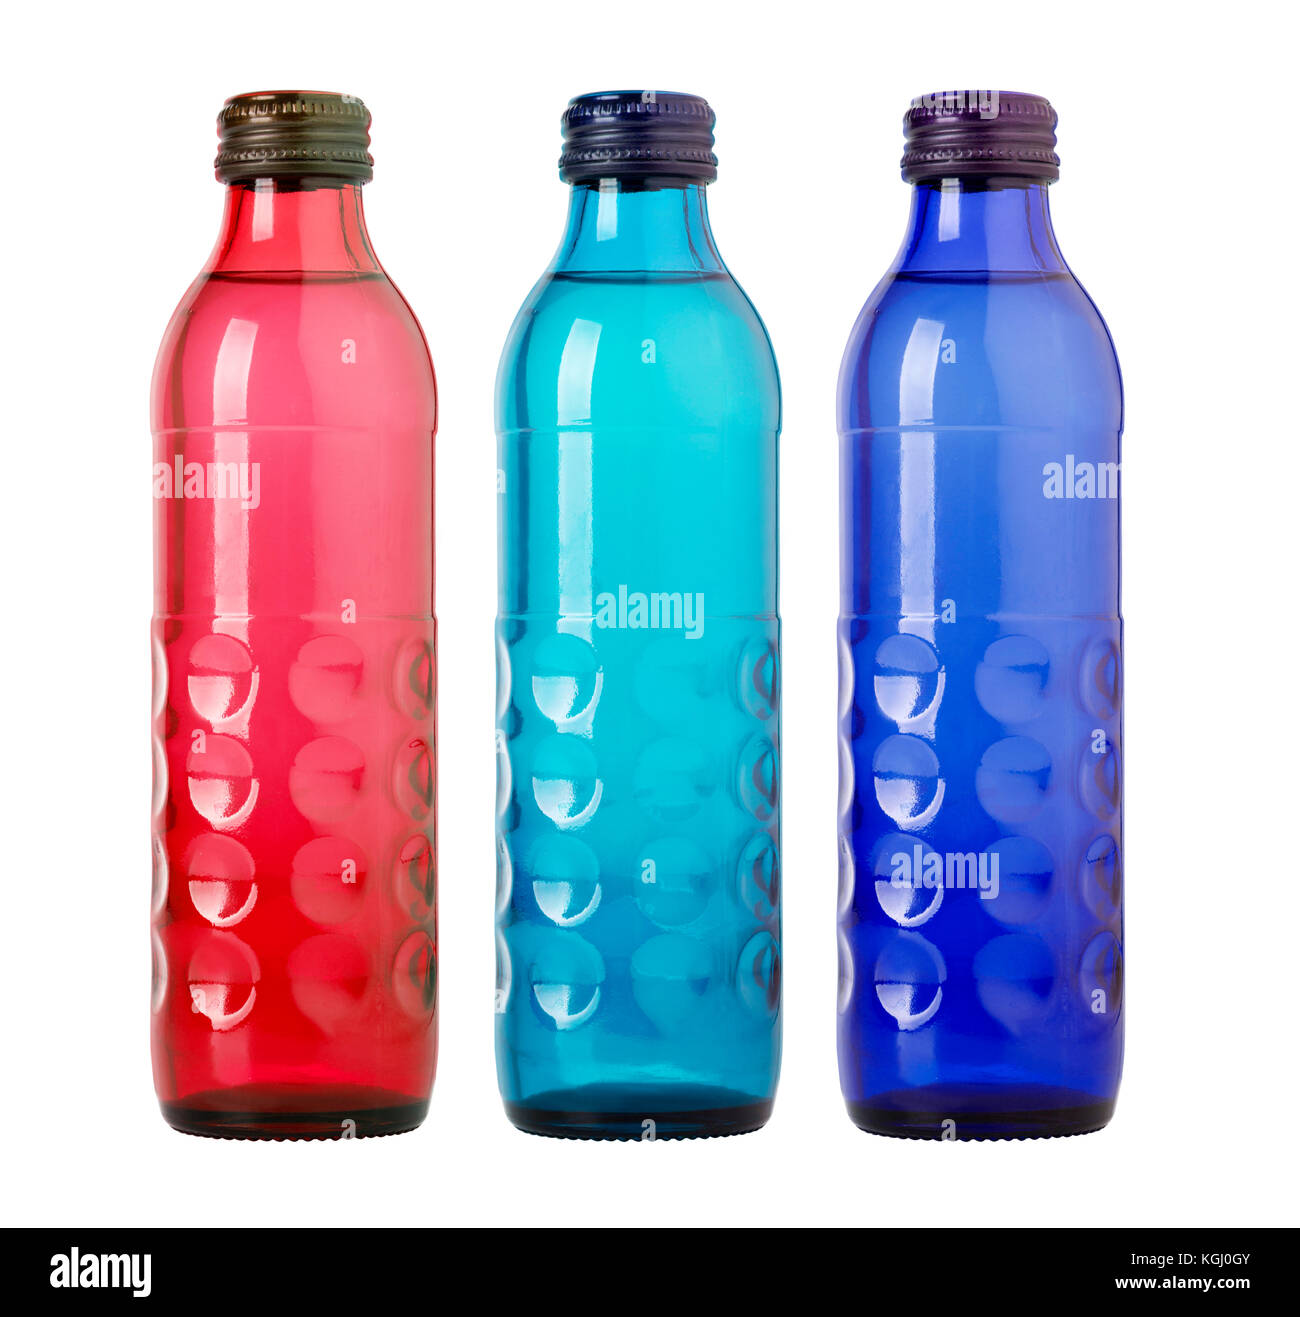 https://c8.alamy.com/compes/kgj0gy/tres-botellas-de-agua-aislado-en-blanco-kgj0gy.jpg